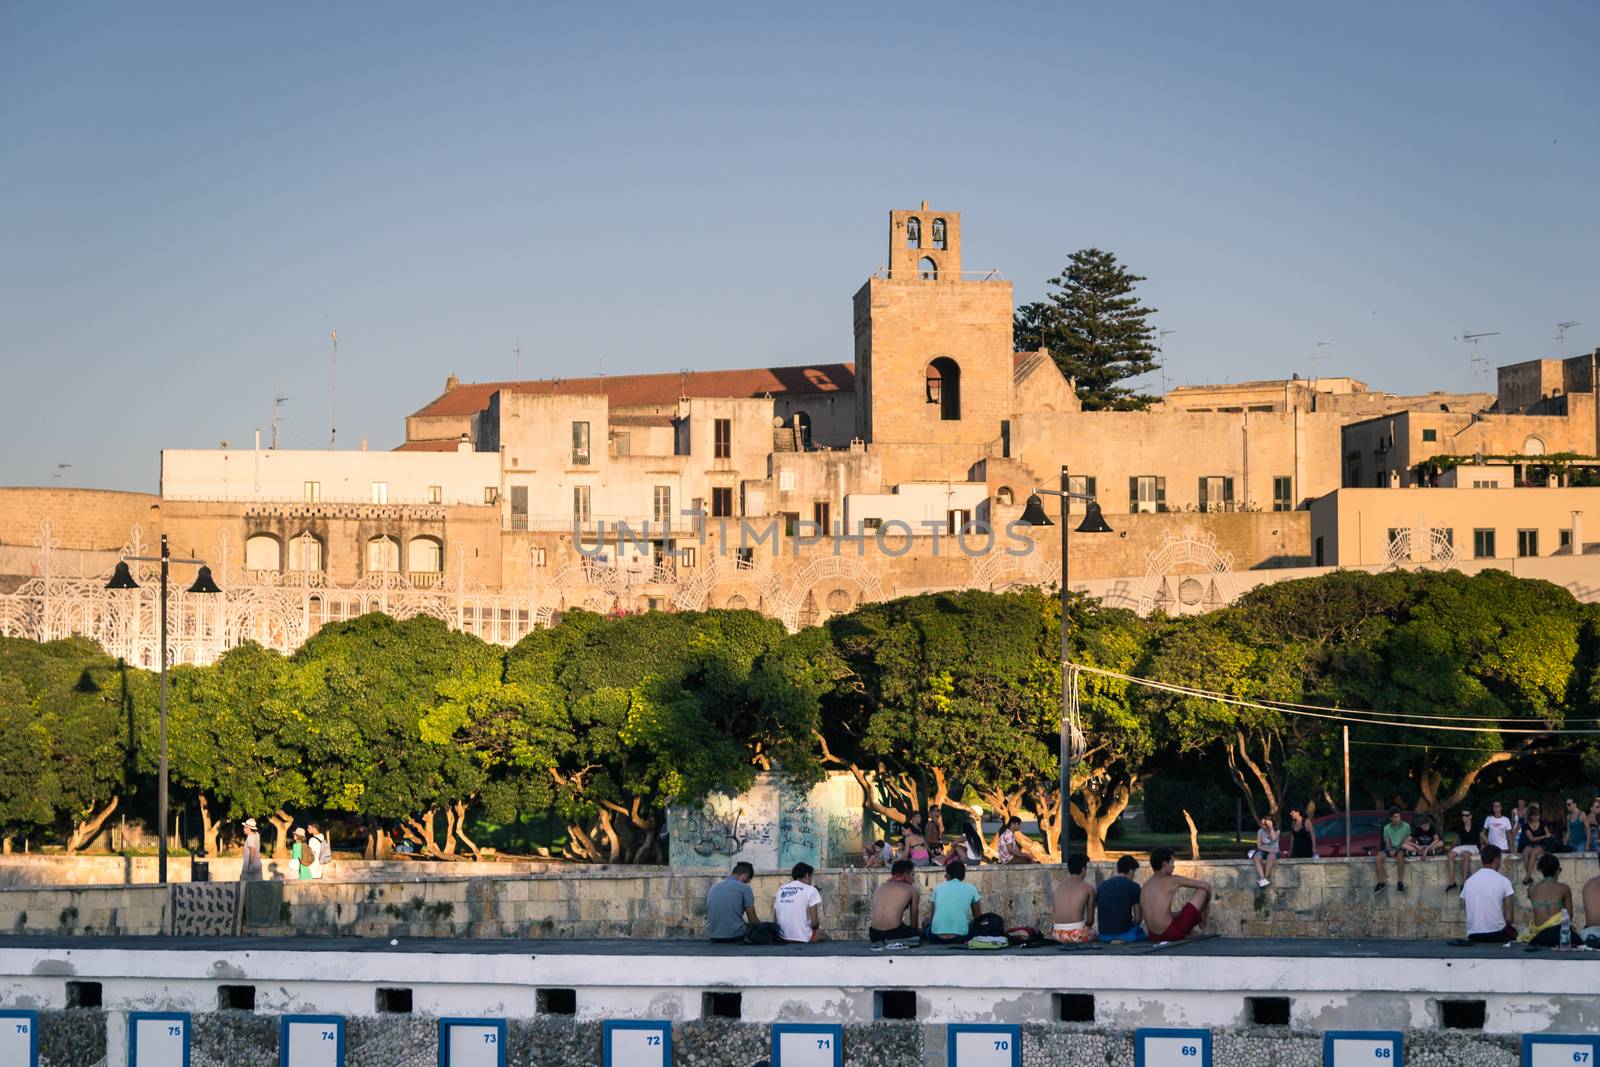 Otranto, Italy - Monday 11, 2014: Tourists visiting the city of Otranto in Apulia vintage